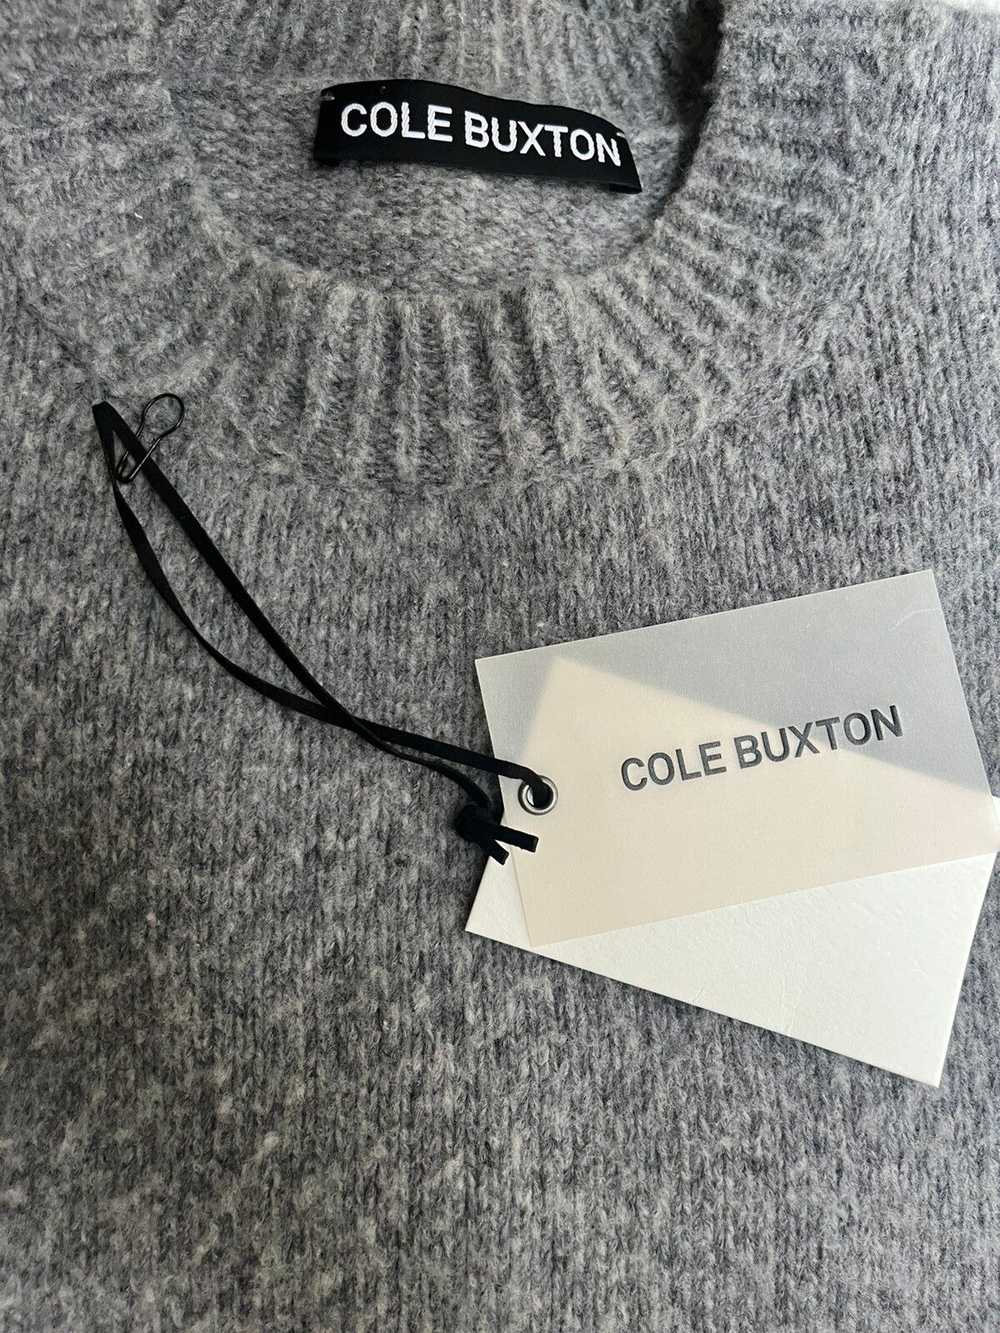 Cole Buxton Cole Buxton Wool Crew Knit Sweater - image 6